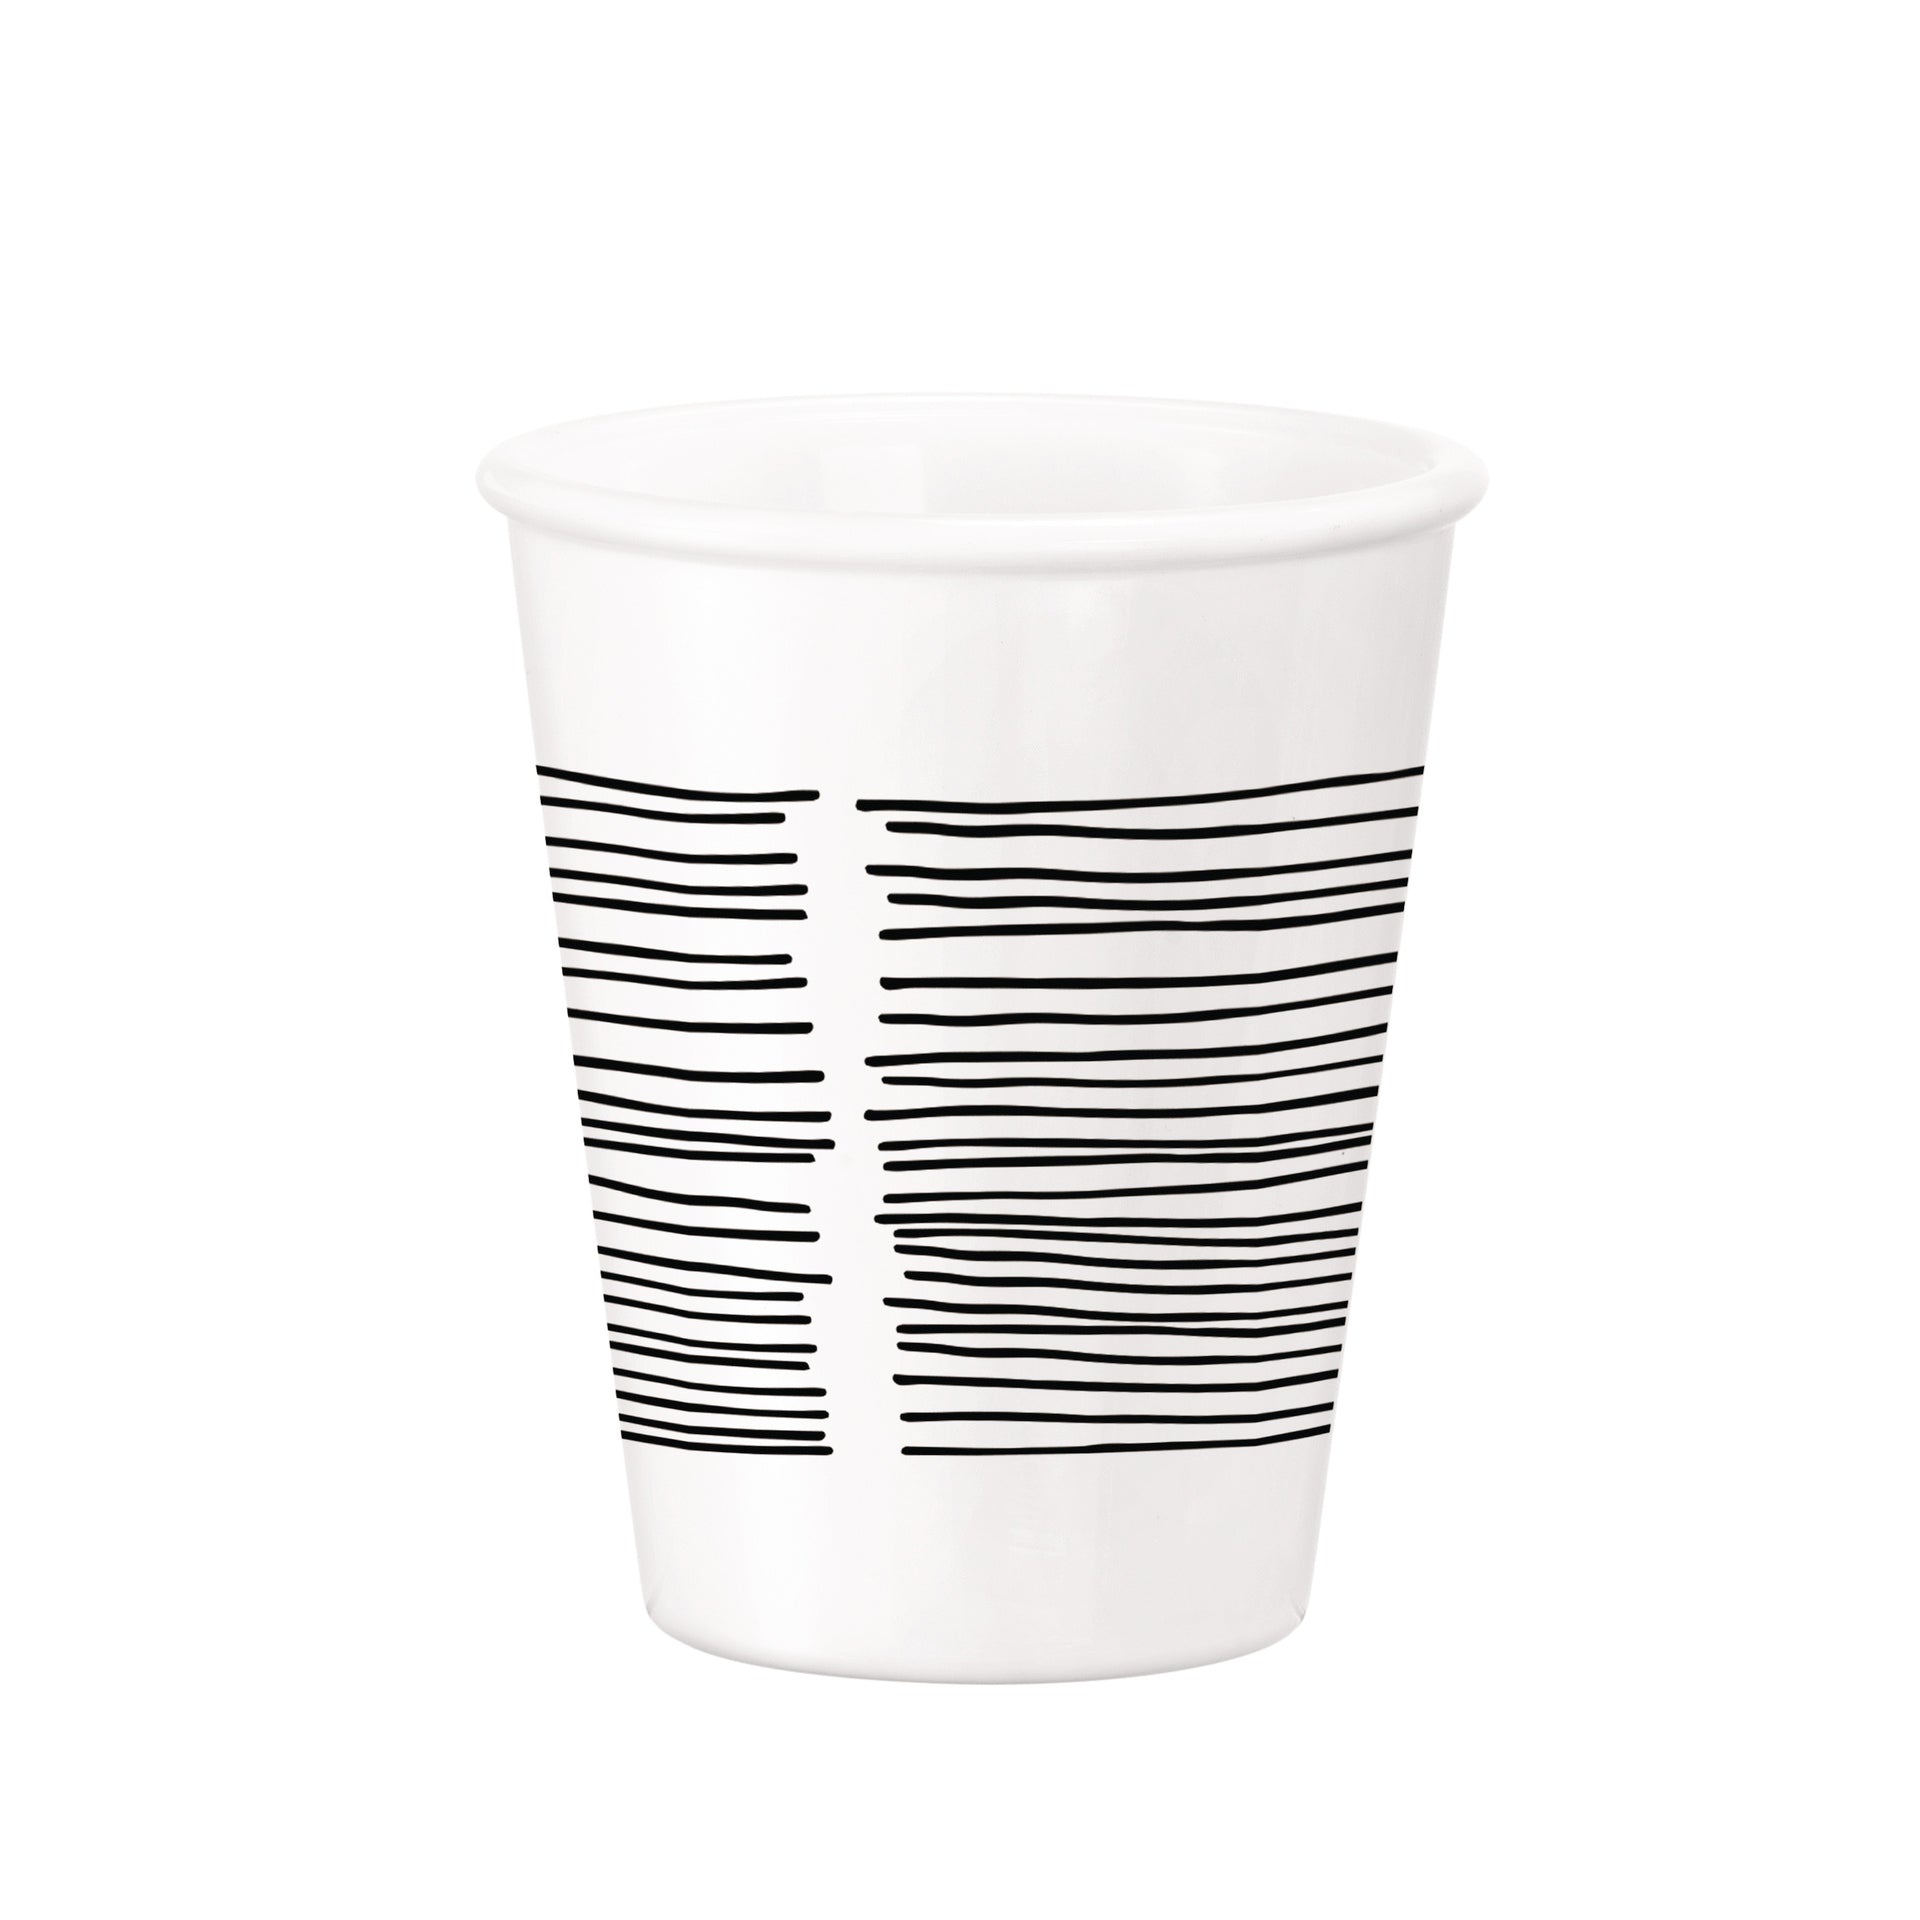 Aromateca 7.25 oz. Opal Glass Tea Cup, Linee (Set of 12)